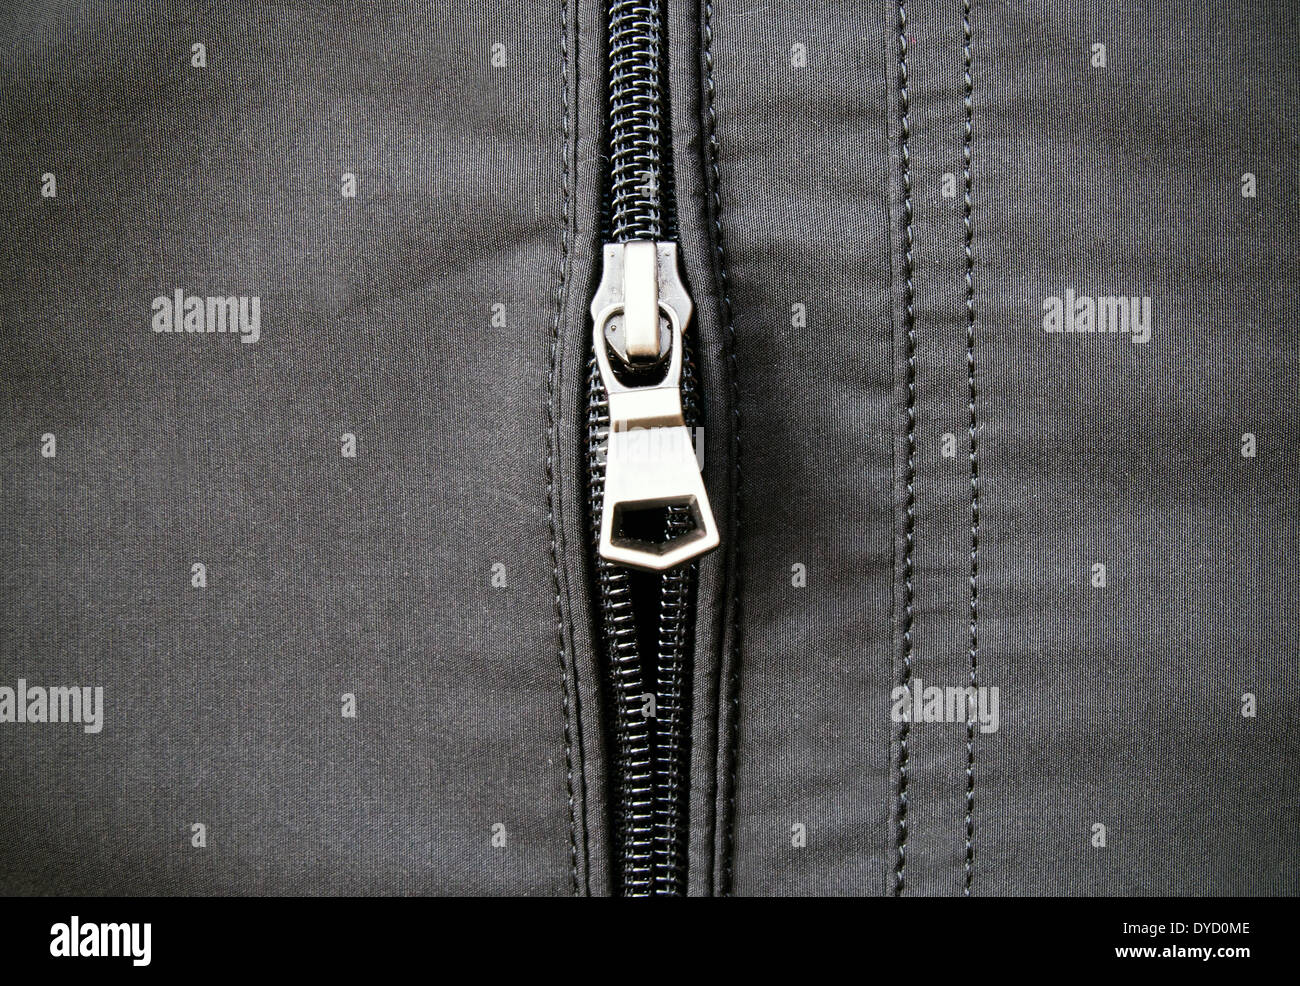 Zip on leather jacket Stock Photo